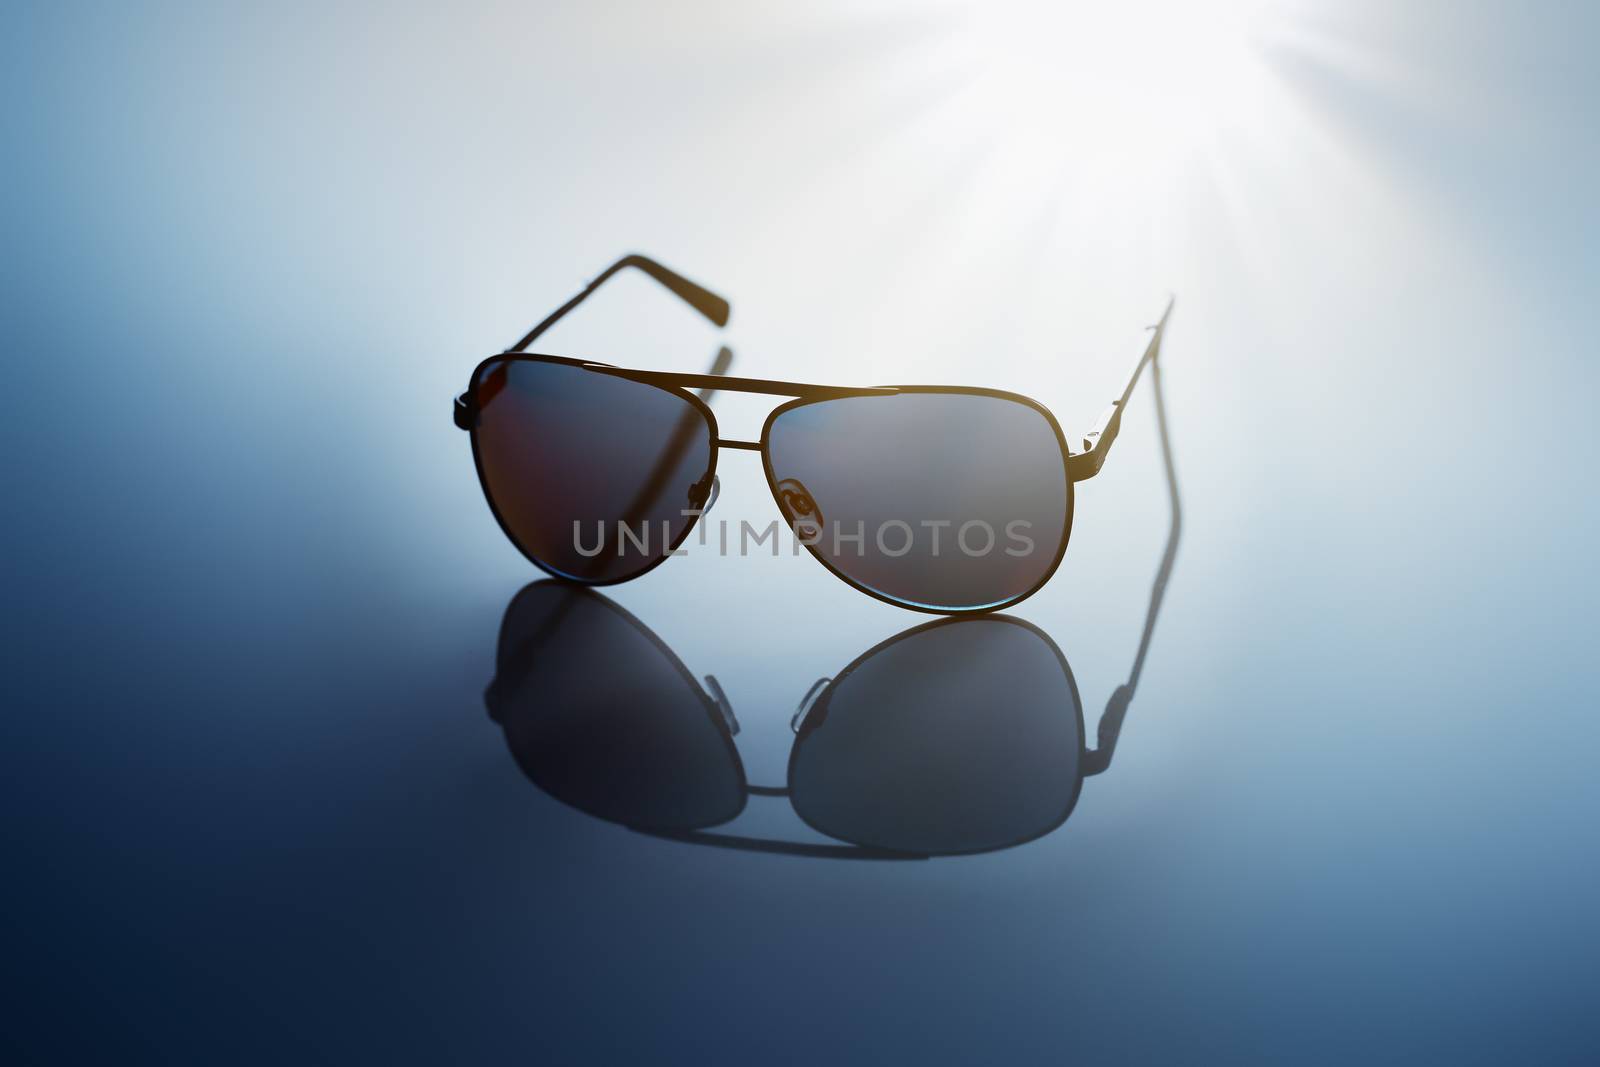 Sunglasses on blue reflective background.